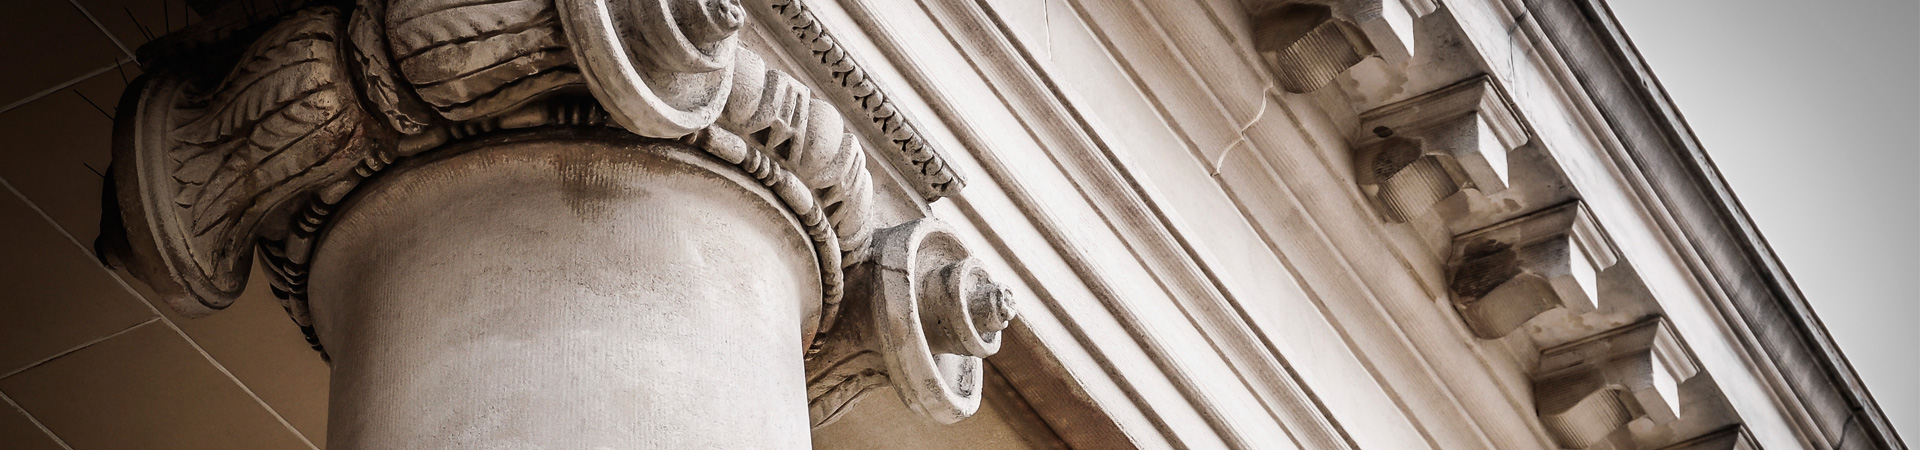 Civil Litigation & Arbitration